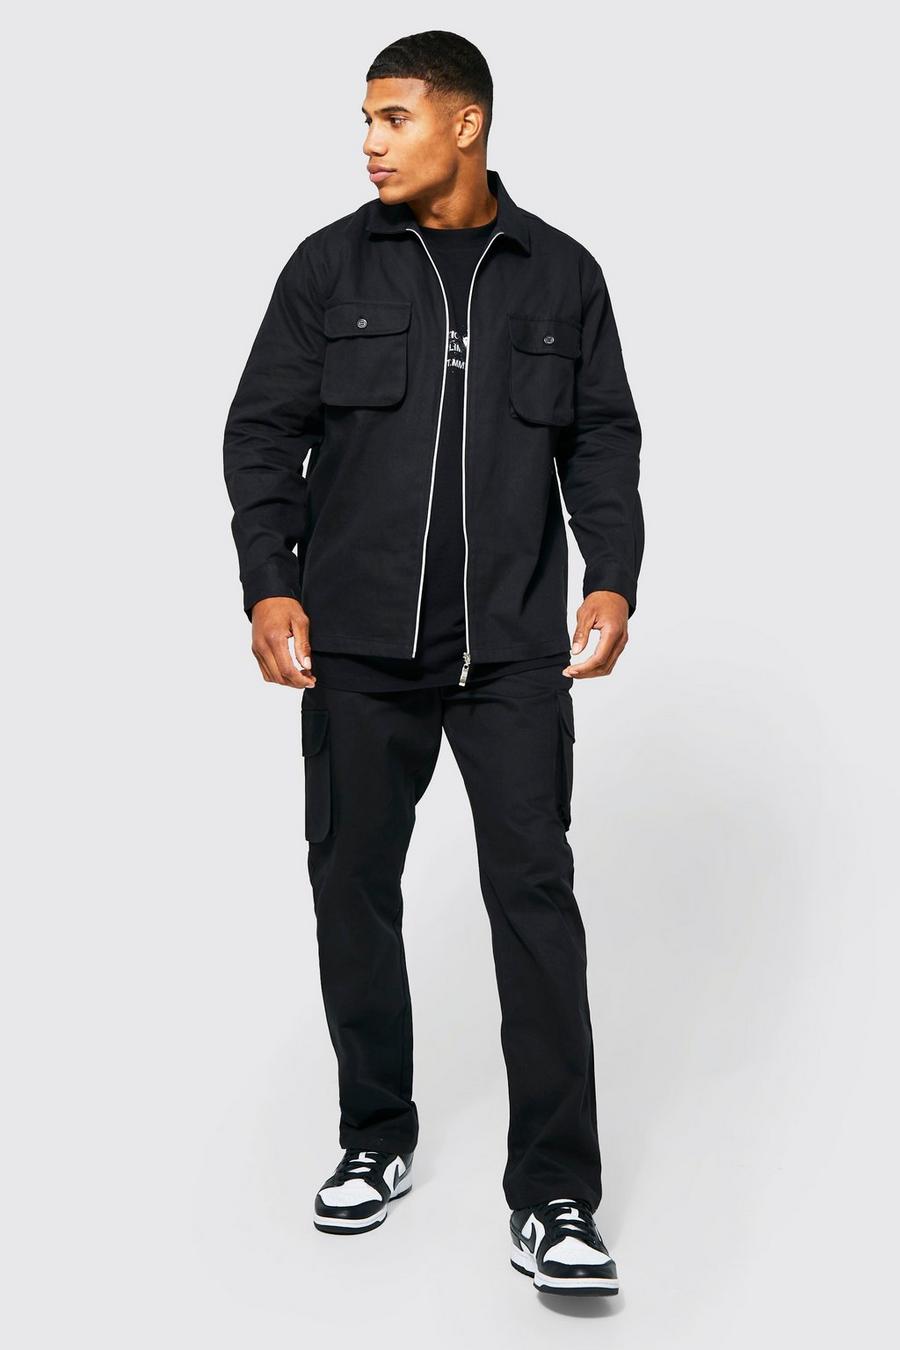 Black Utility Zip Shirt And Trouser Set